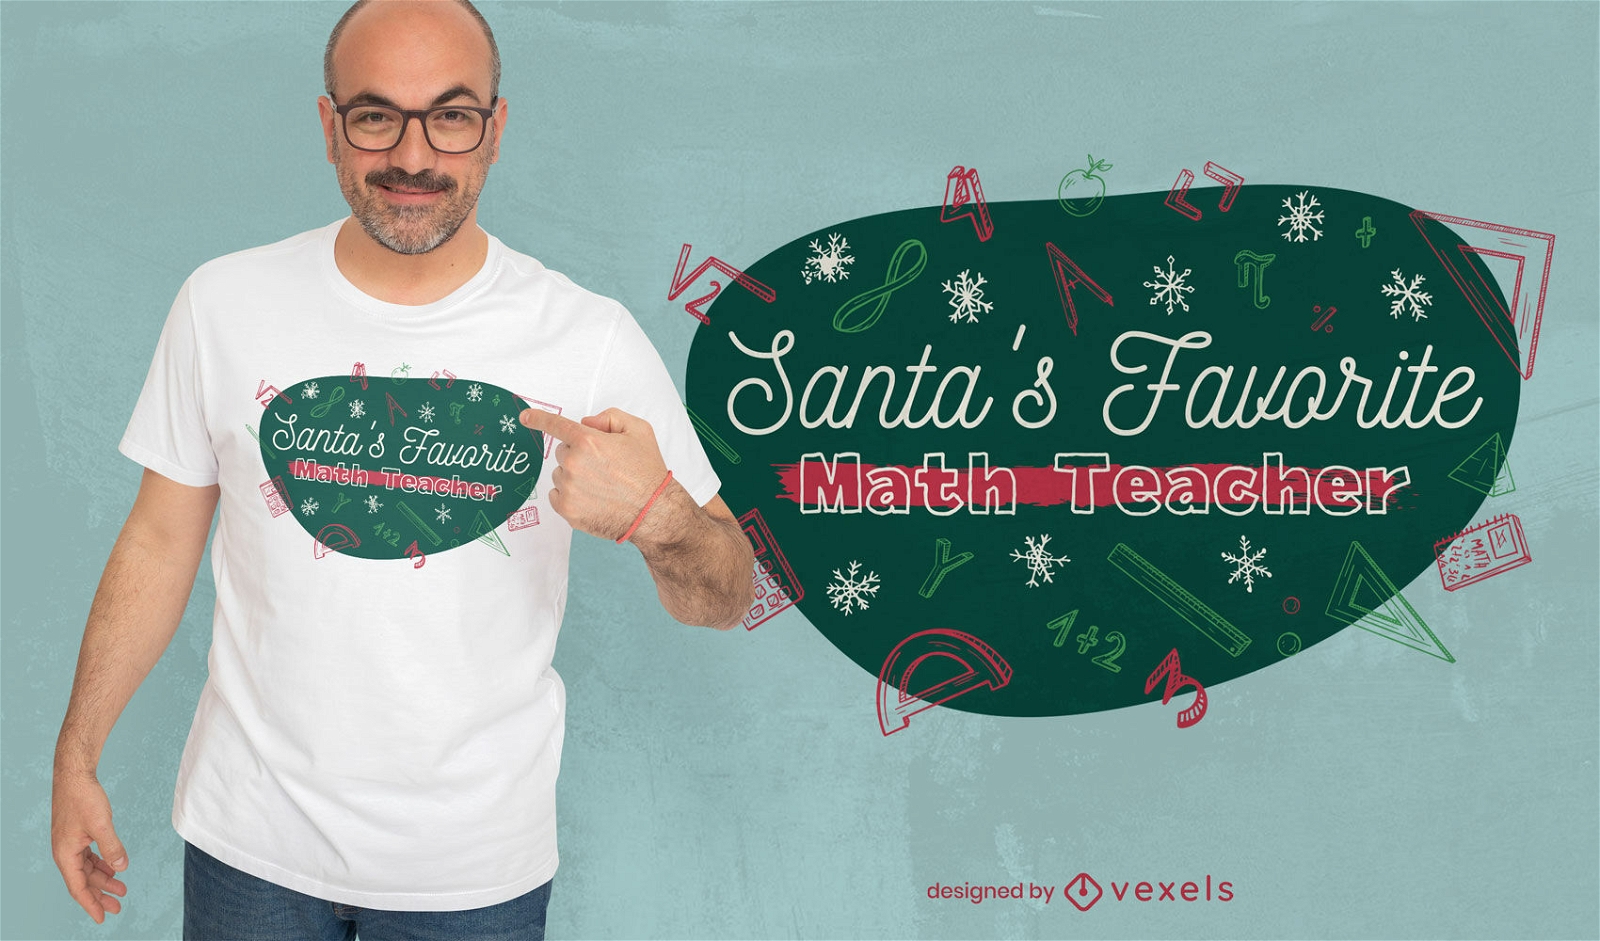 Diseño de camiseta navideña de profesor de matemáticas favorito de Santa